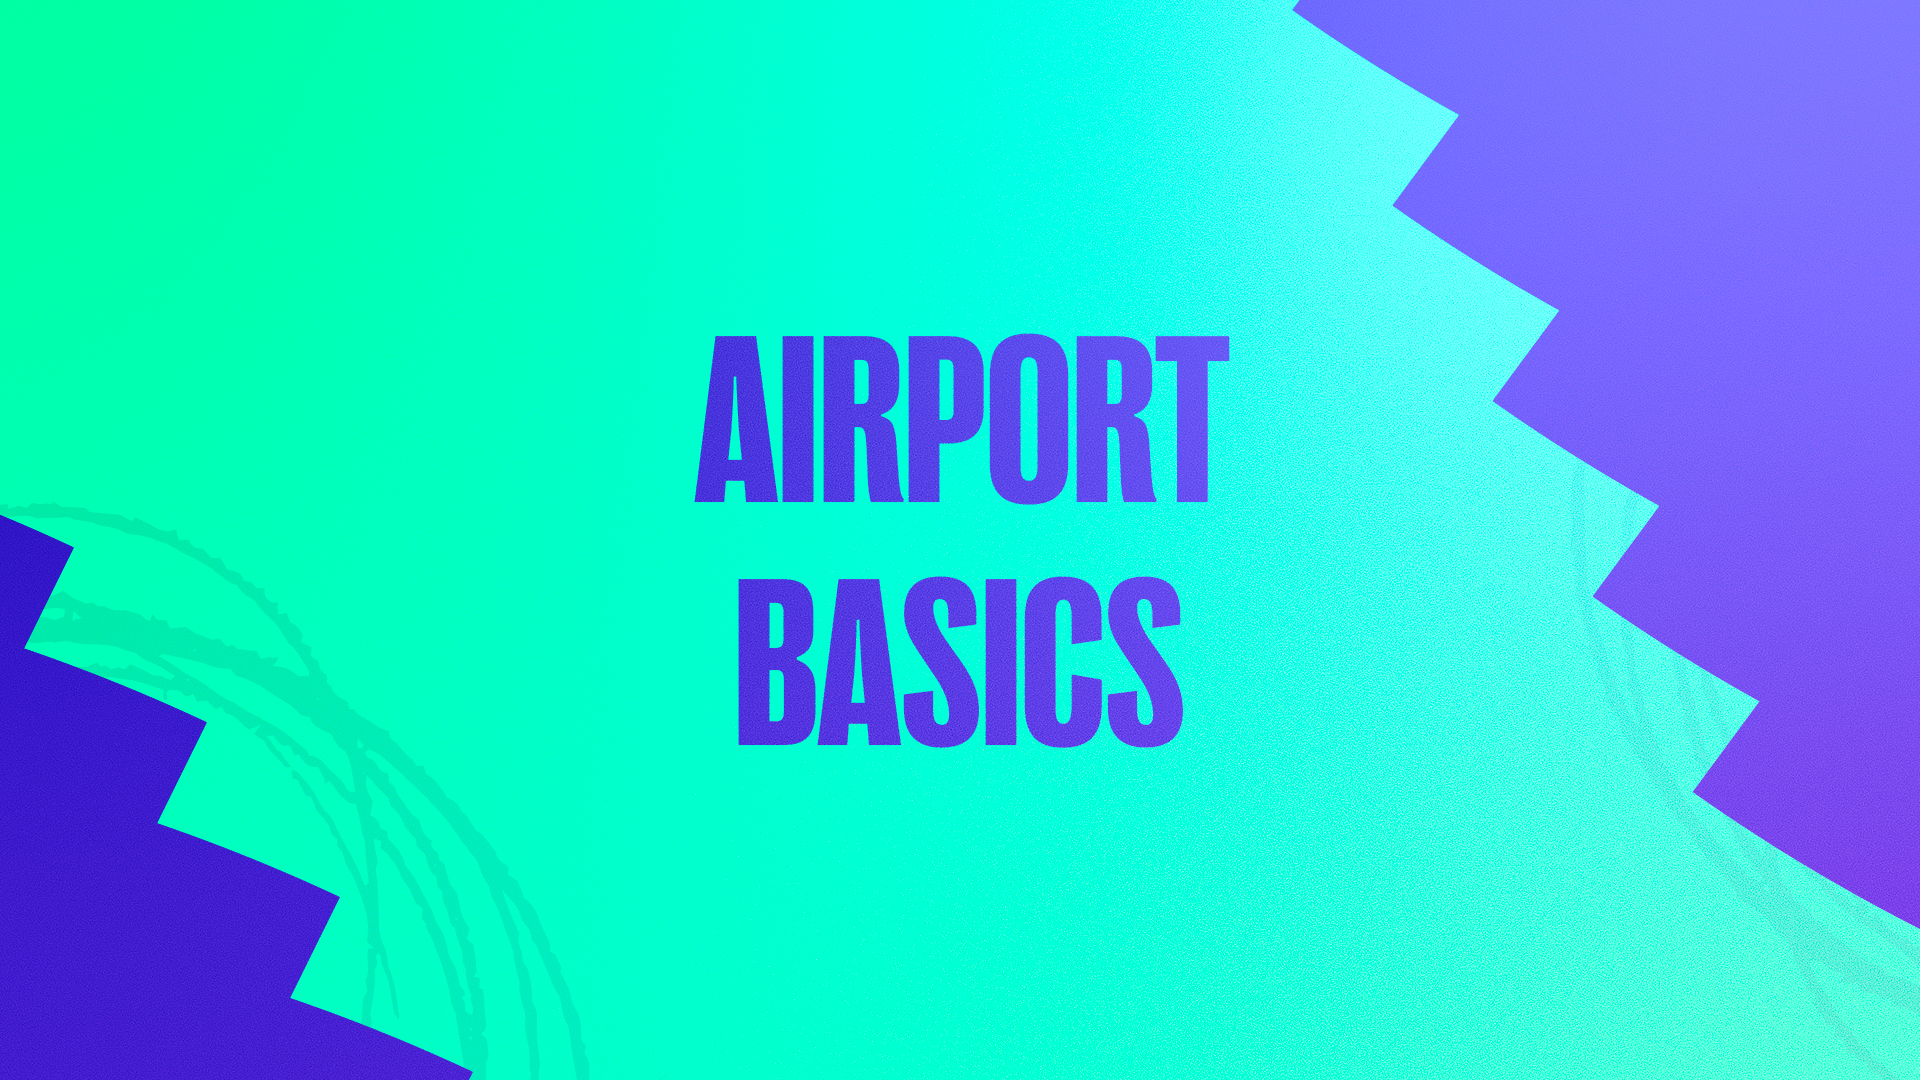 Airport basics